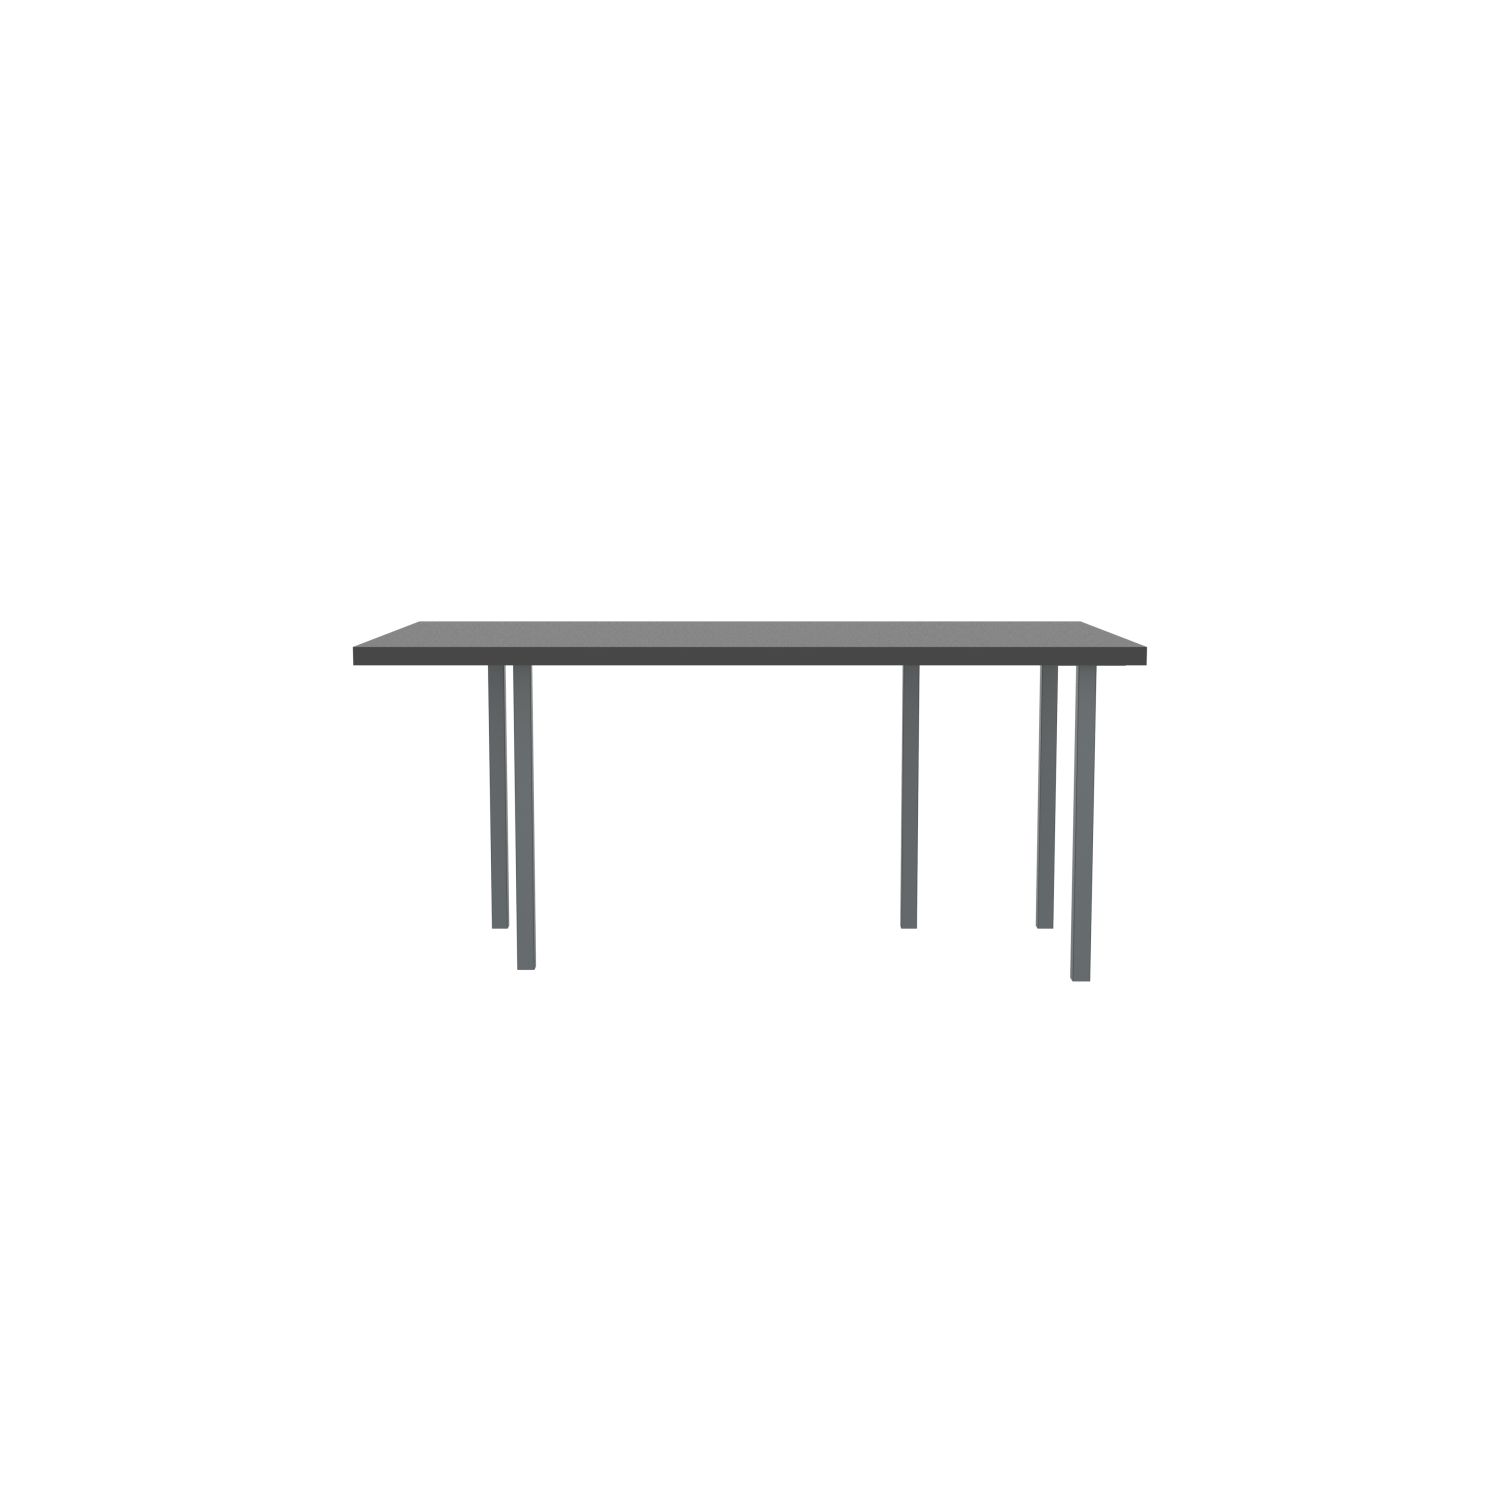 lensvelt bbrand table five fixed heigt 915x172 hpl black 50 mm price level 1 dark grey ral7011